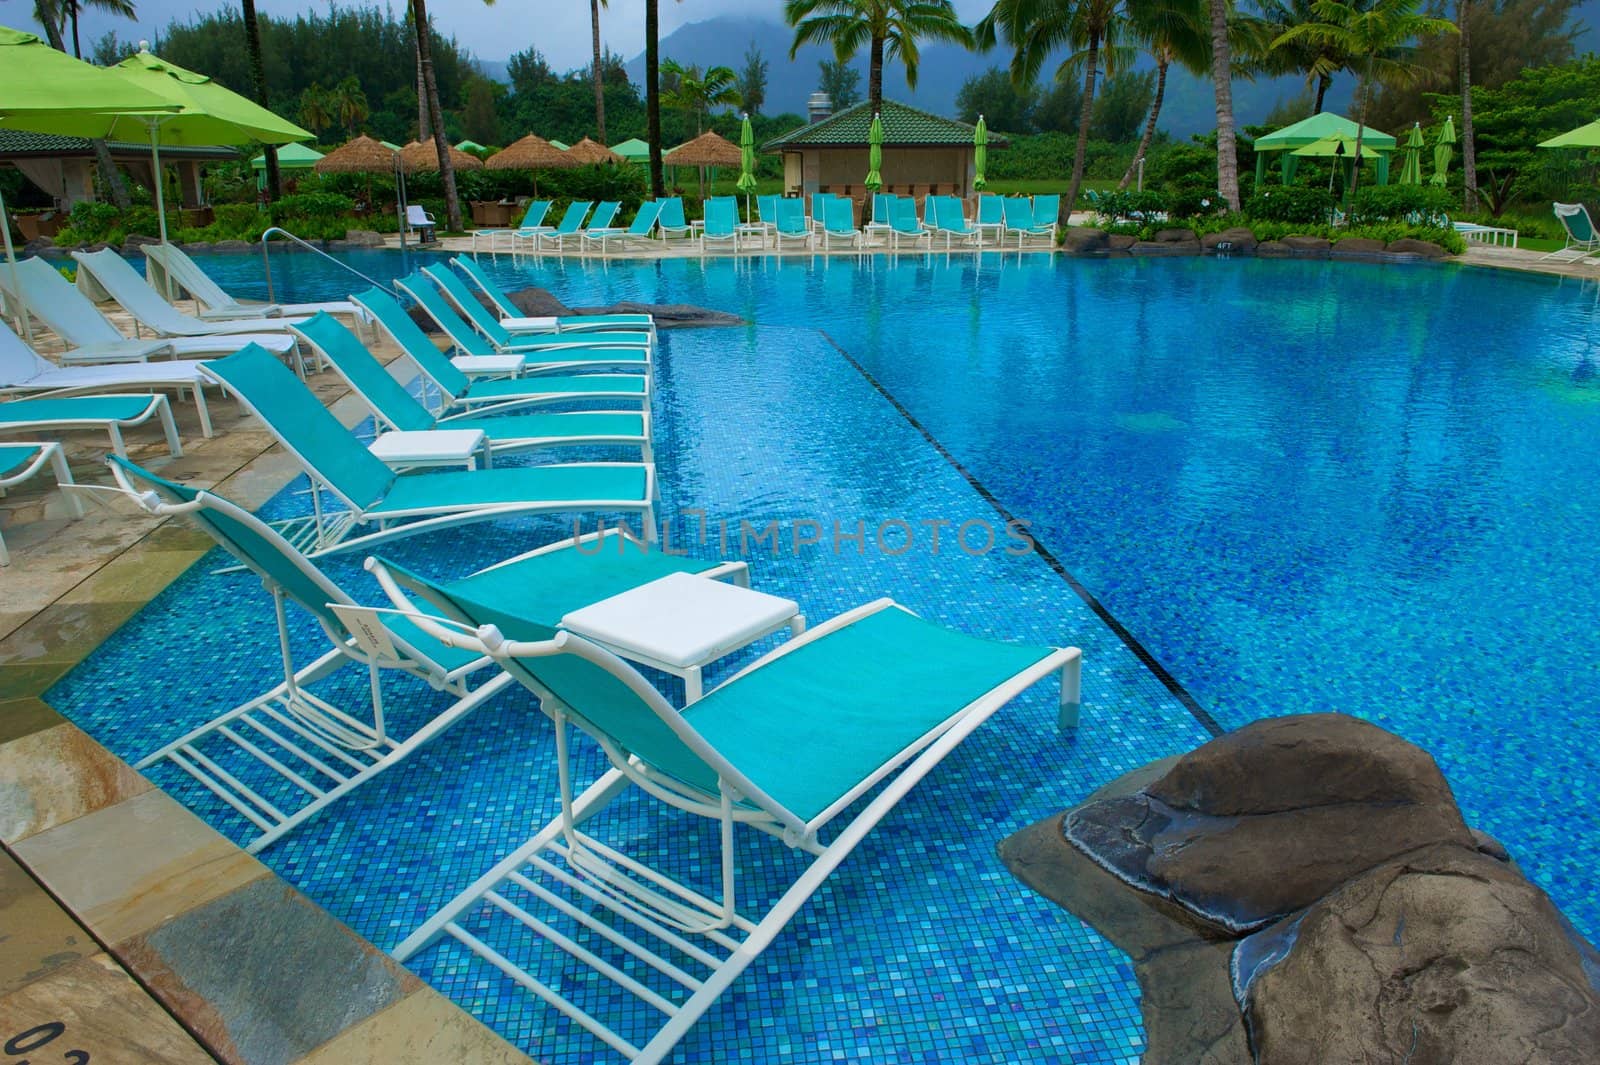 Blue Tiled Pool at Kauai Resort by pixelsnap